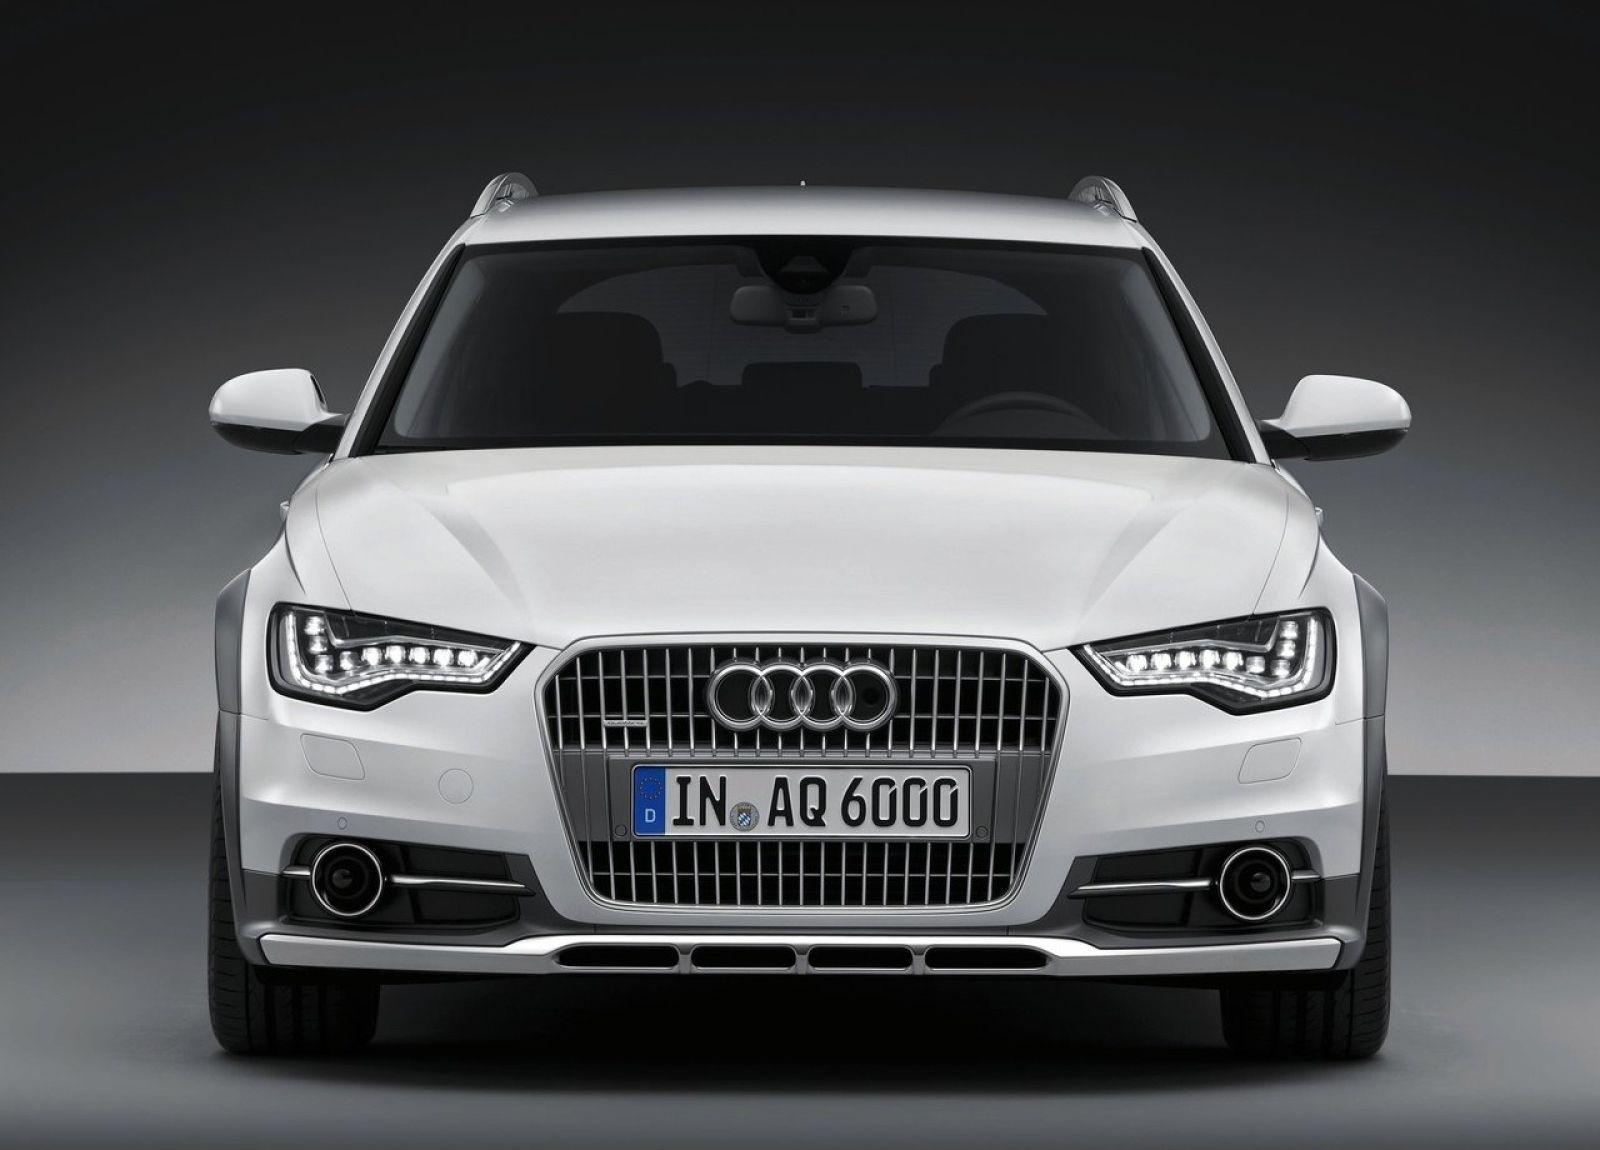 Audi A6 Allroad HD Wallpaper. The World of Audi